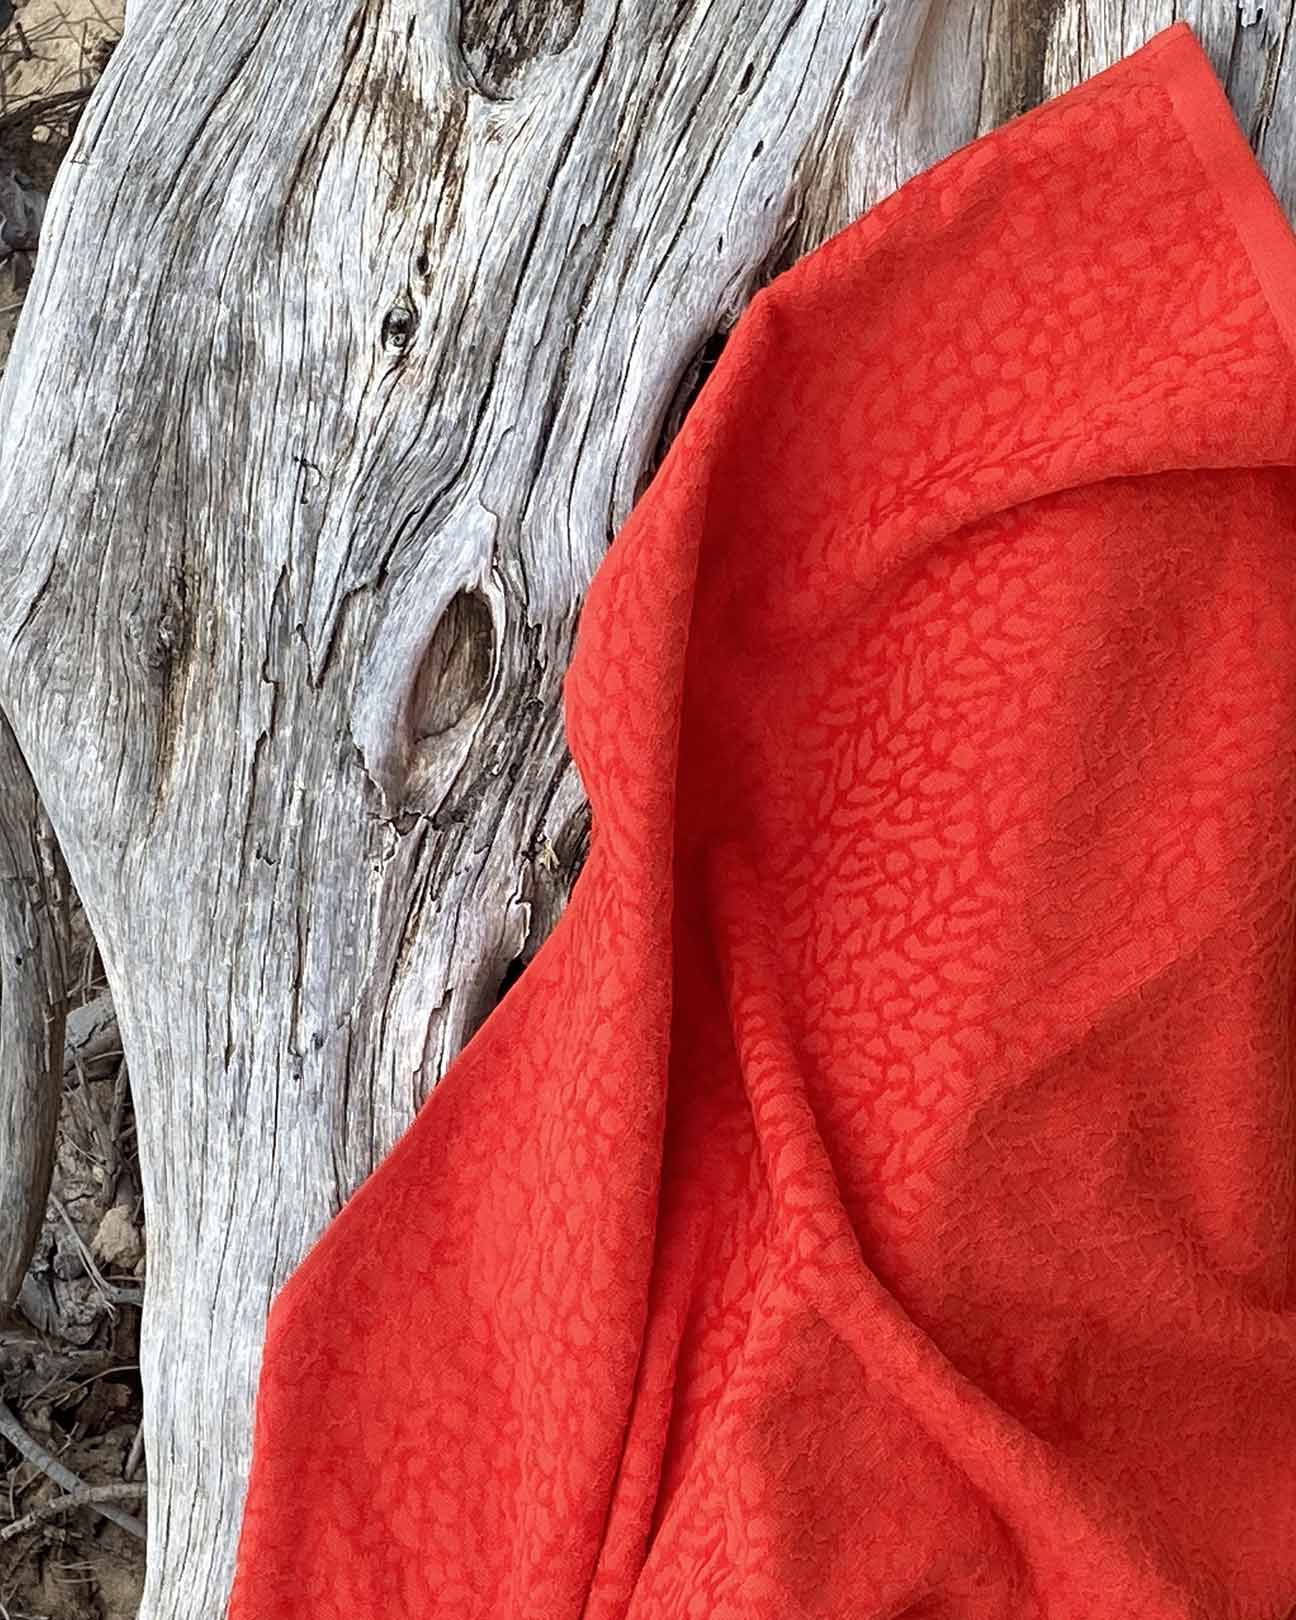 Ventalina Red Organic Cotton Beach Towel